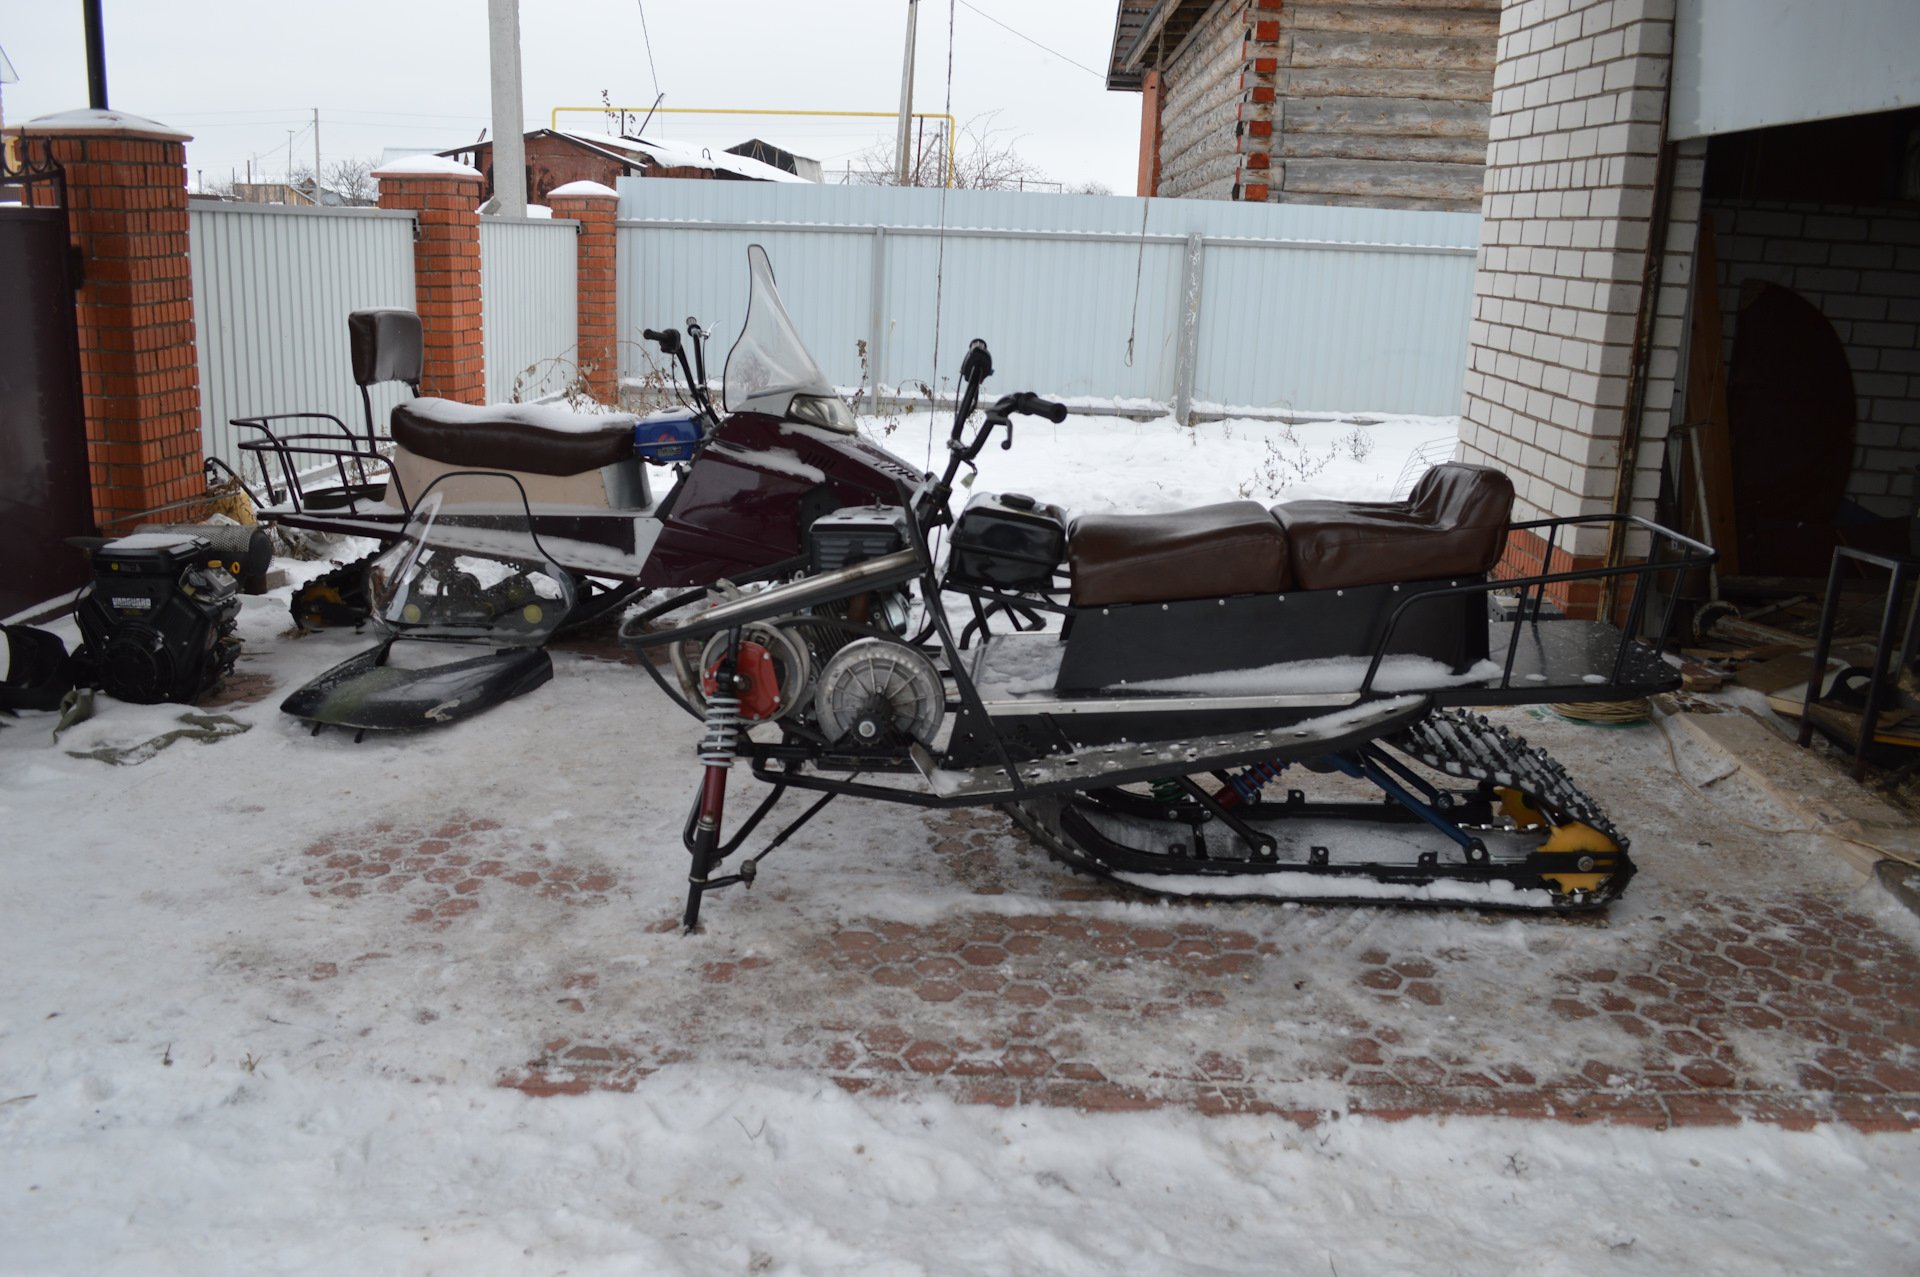 Снегоход SM-001 и SM-002, запчасти и двигатели Lifan в Республике Коми